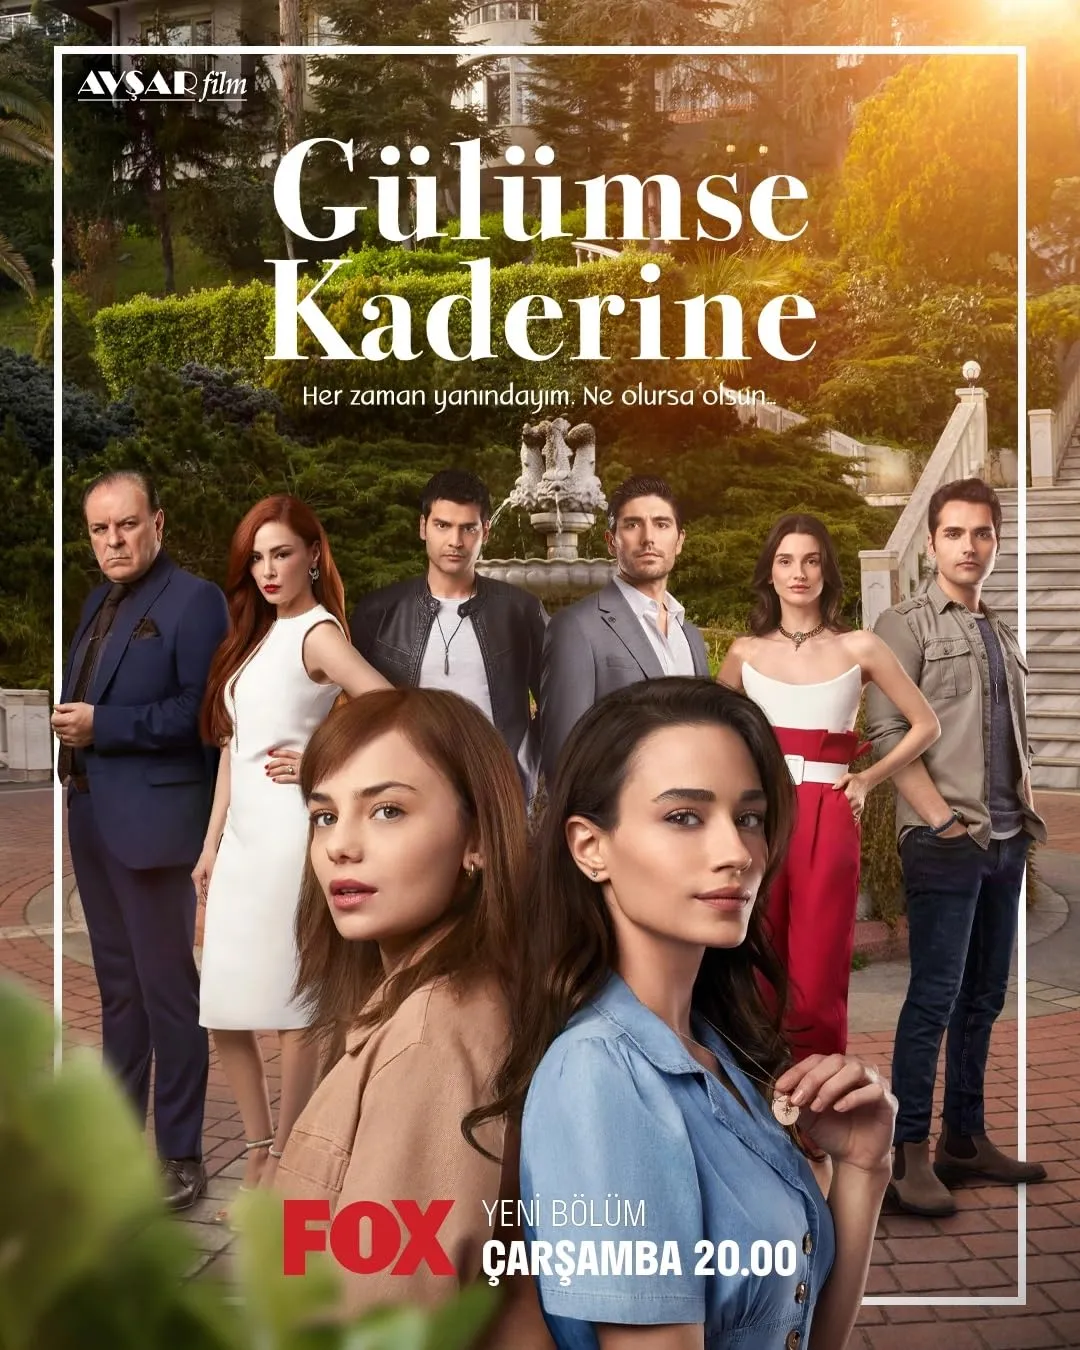 Gulumse Kaderine | Zambeste destinului tau online subtitrat in romana